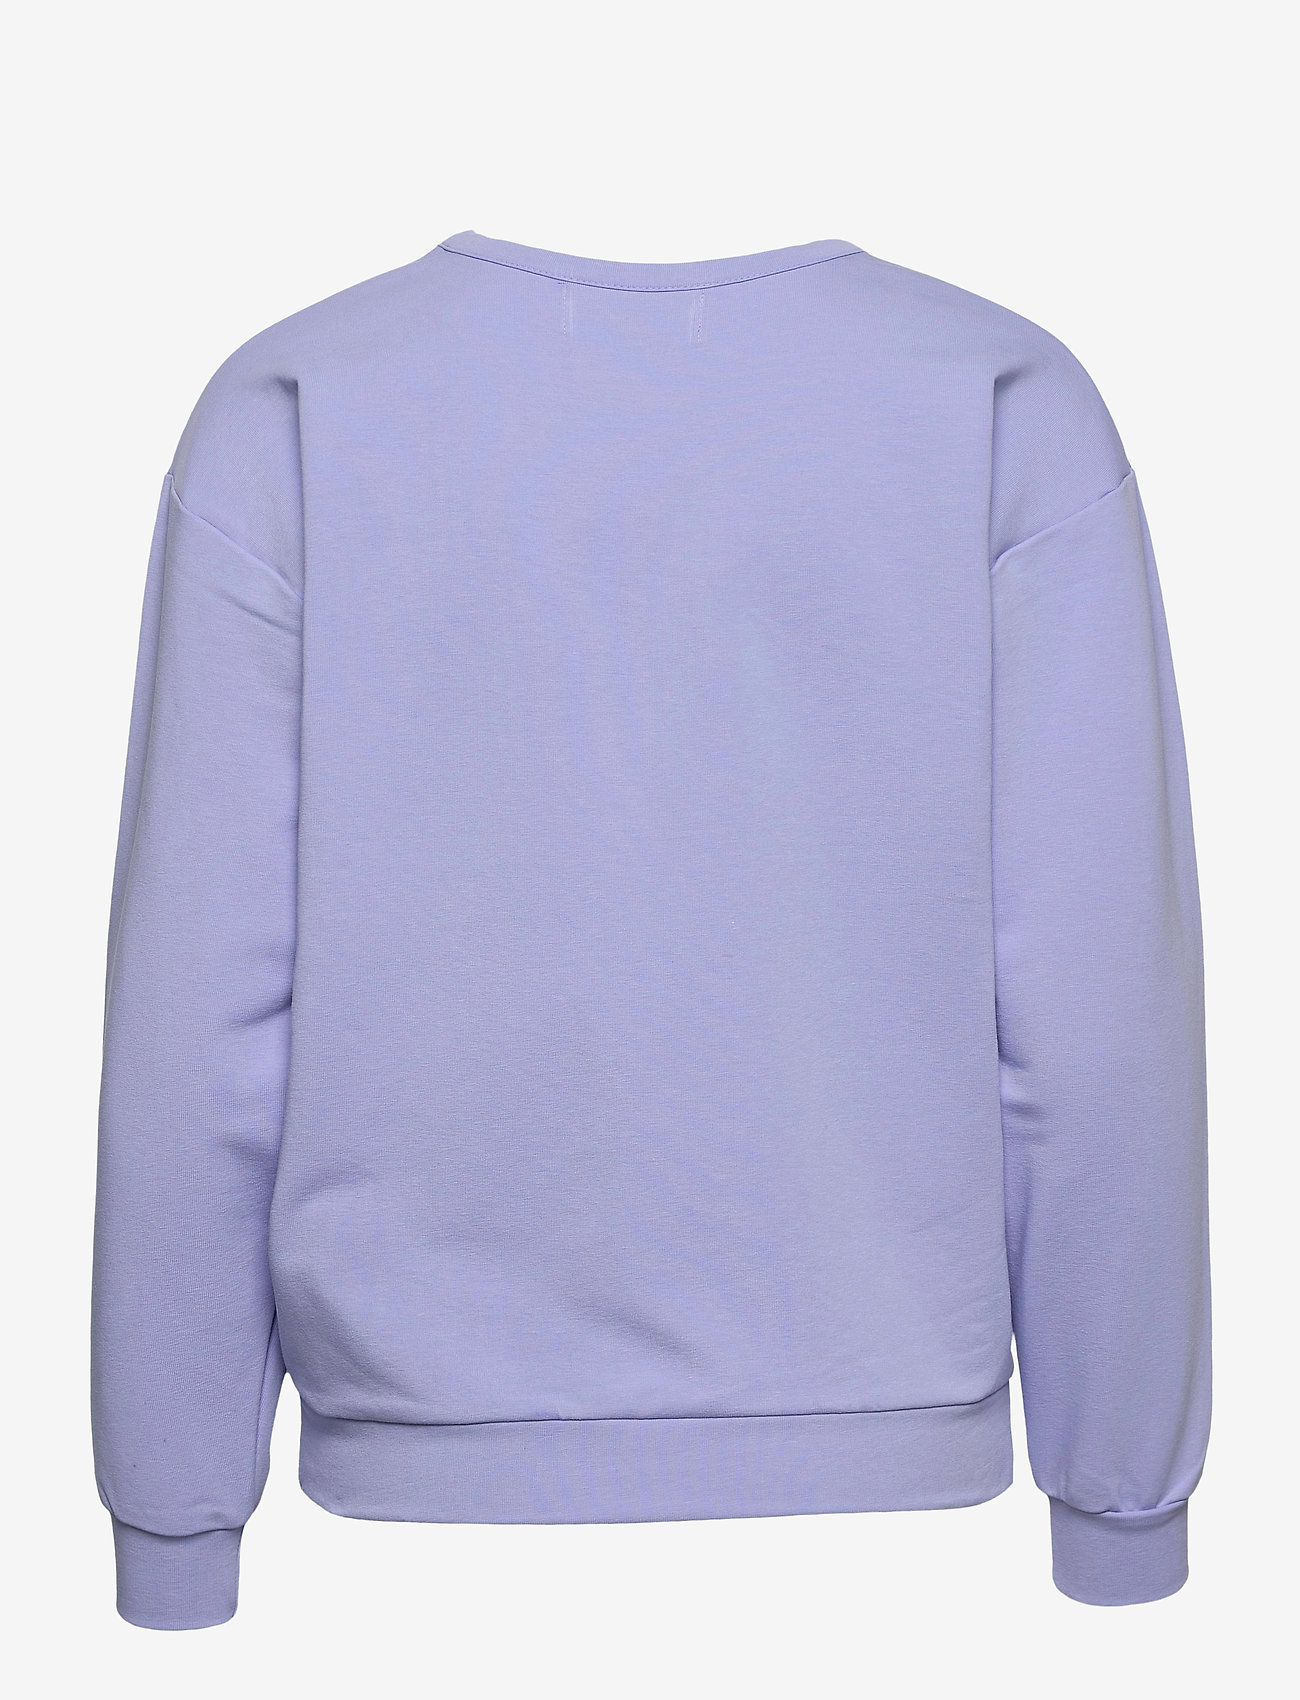 R H Studio X Boozt Magic Sweater Lavendel Black 108 R H Studio Boozt Com